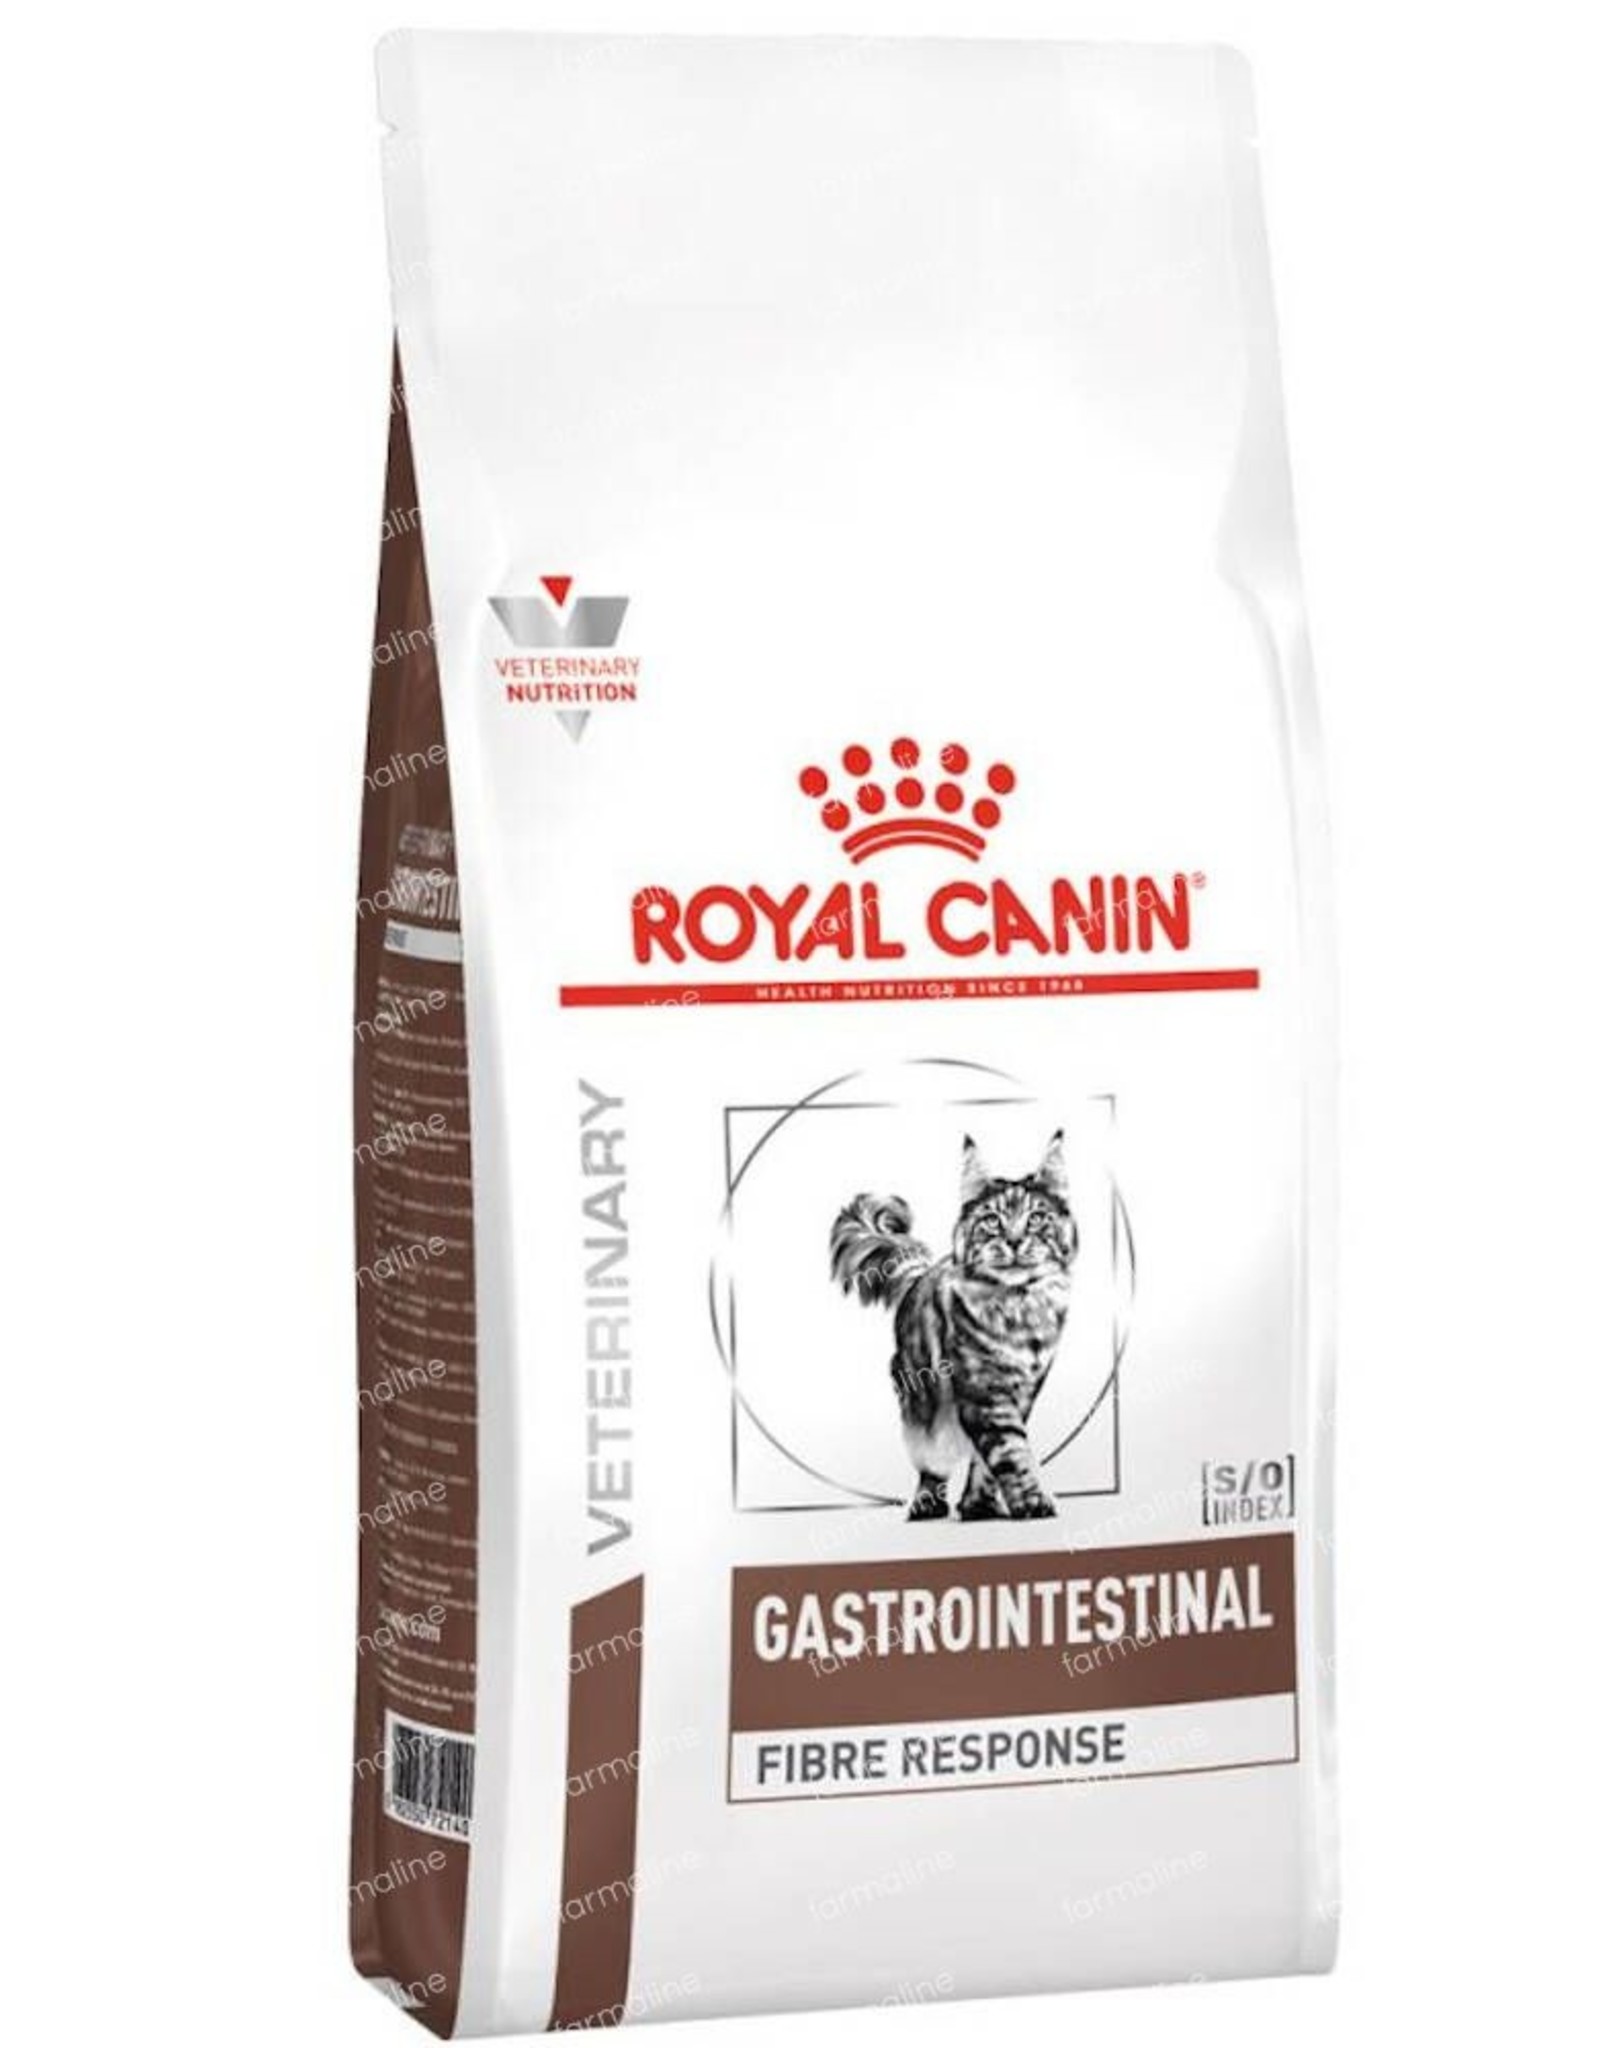 Royal Canin Royal Canin  Fiber Response Katze 4kg